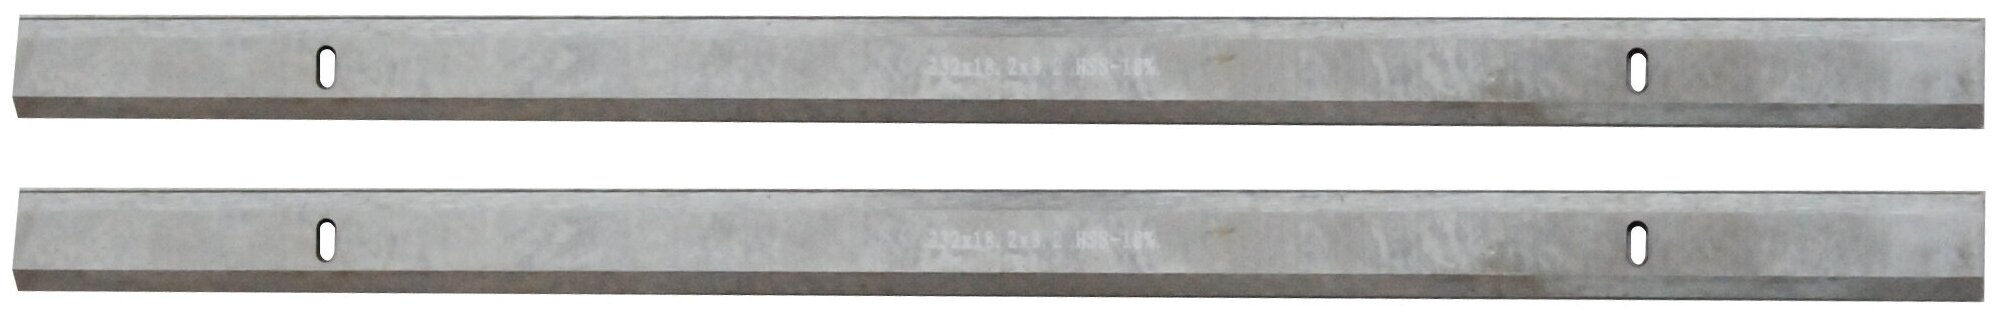 Нож К-27 (2 шт) для рейсмусового станка Корвет-27 Энкор (25547)